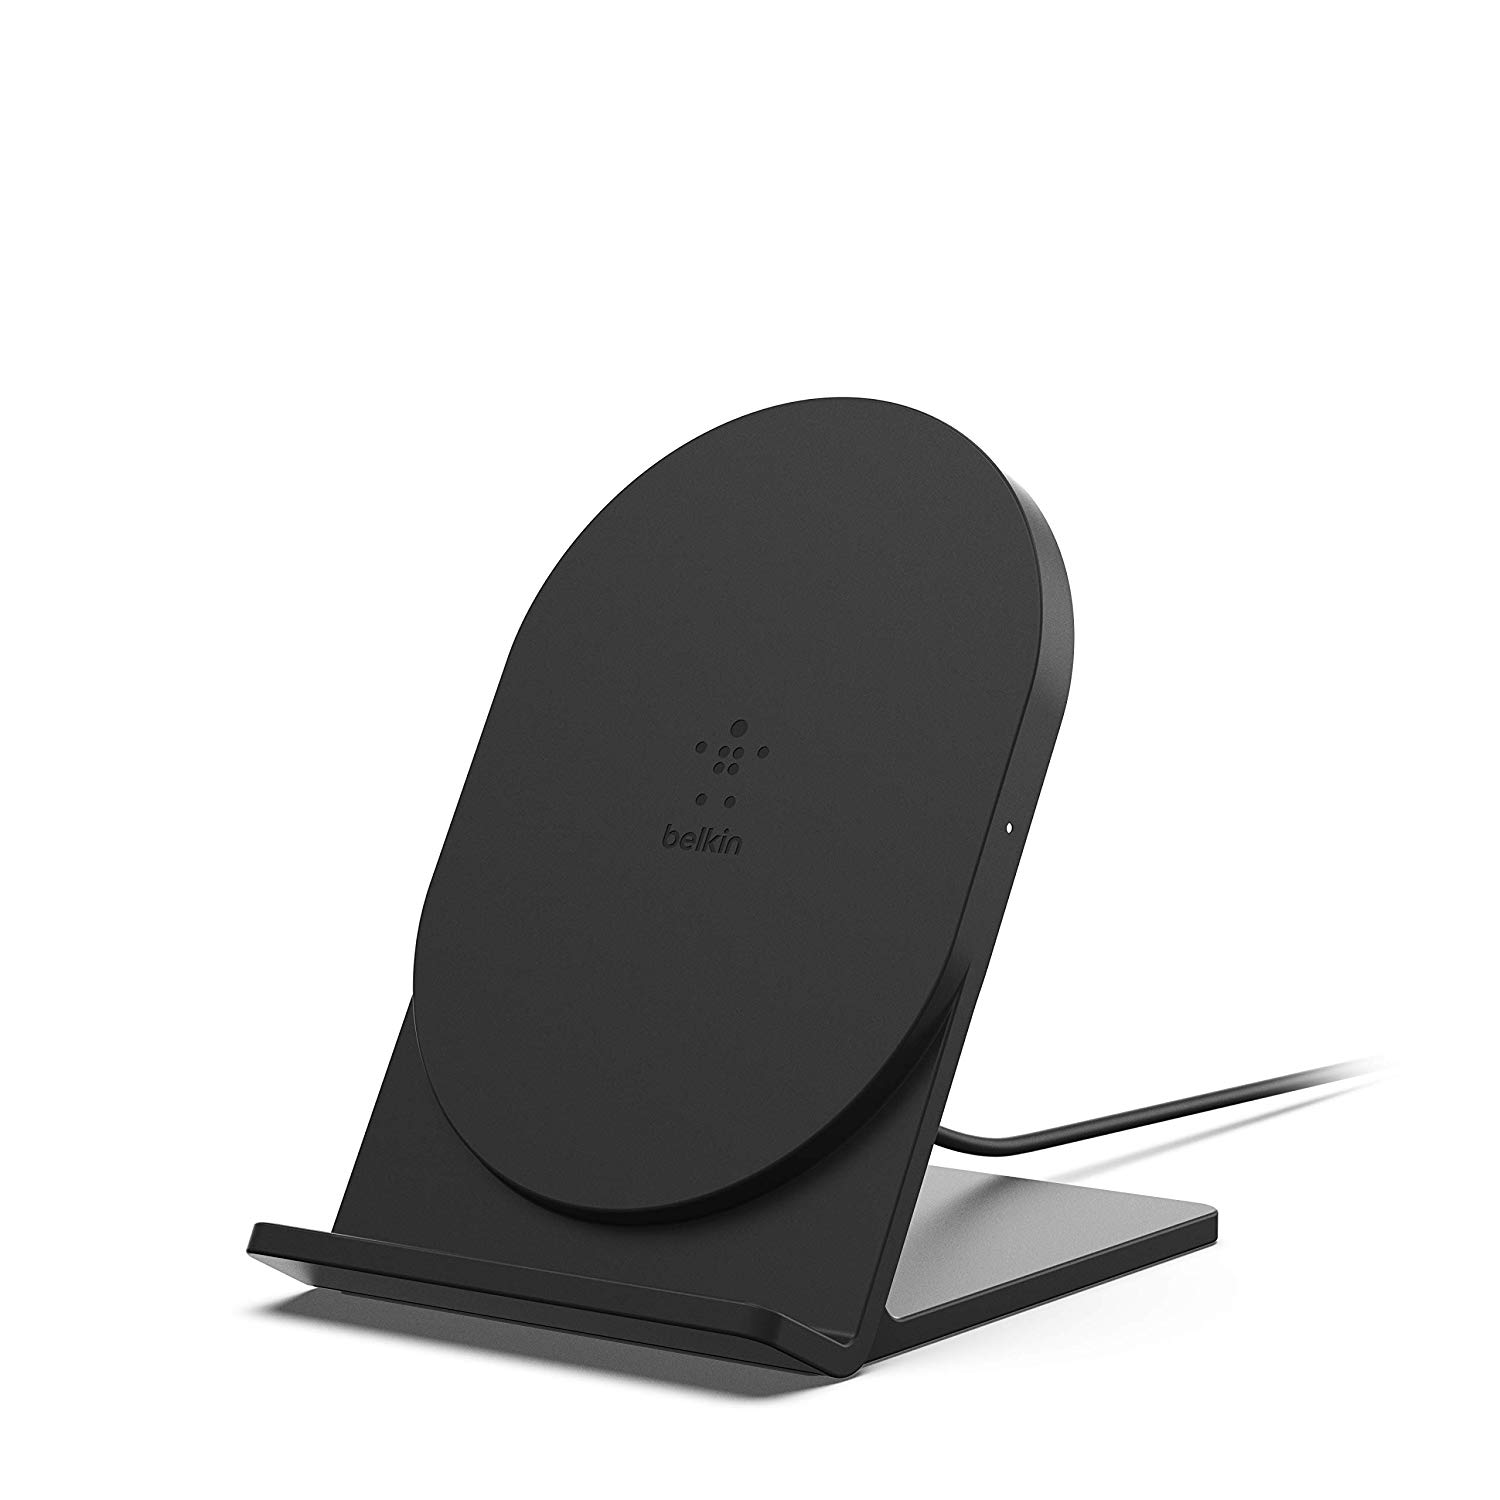 Belkin、Qi対応のワイヤレス充電器｢BOOST CHARGE ワイヤレス充電スタンド｣を5月31日に発売へ